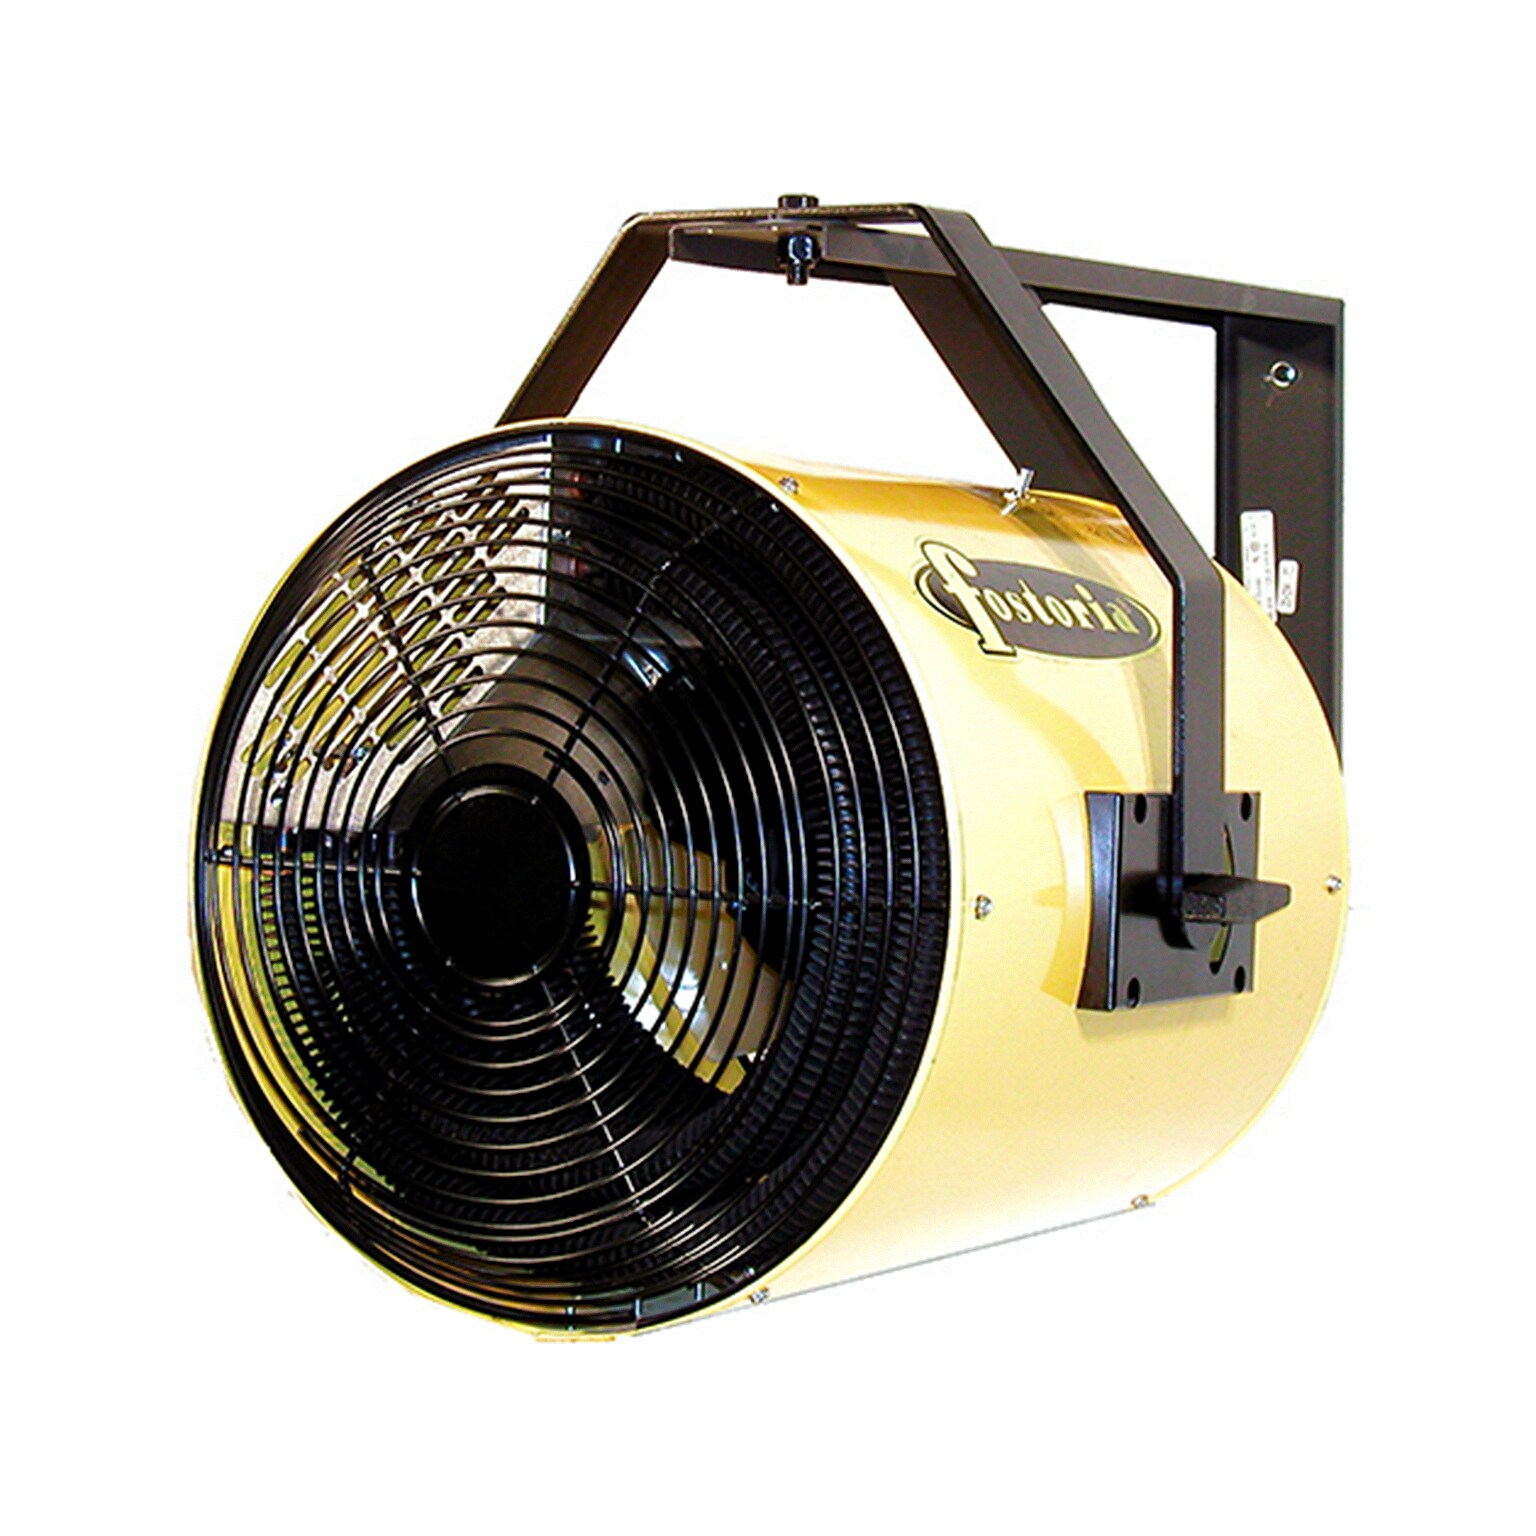 TPI Corporation Fostoria YES 15000-Watt 51195 BTU Electric Heater, Yellow/Black (08860810)